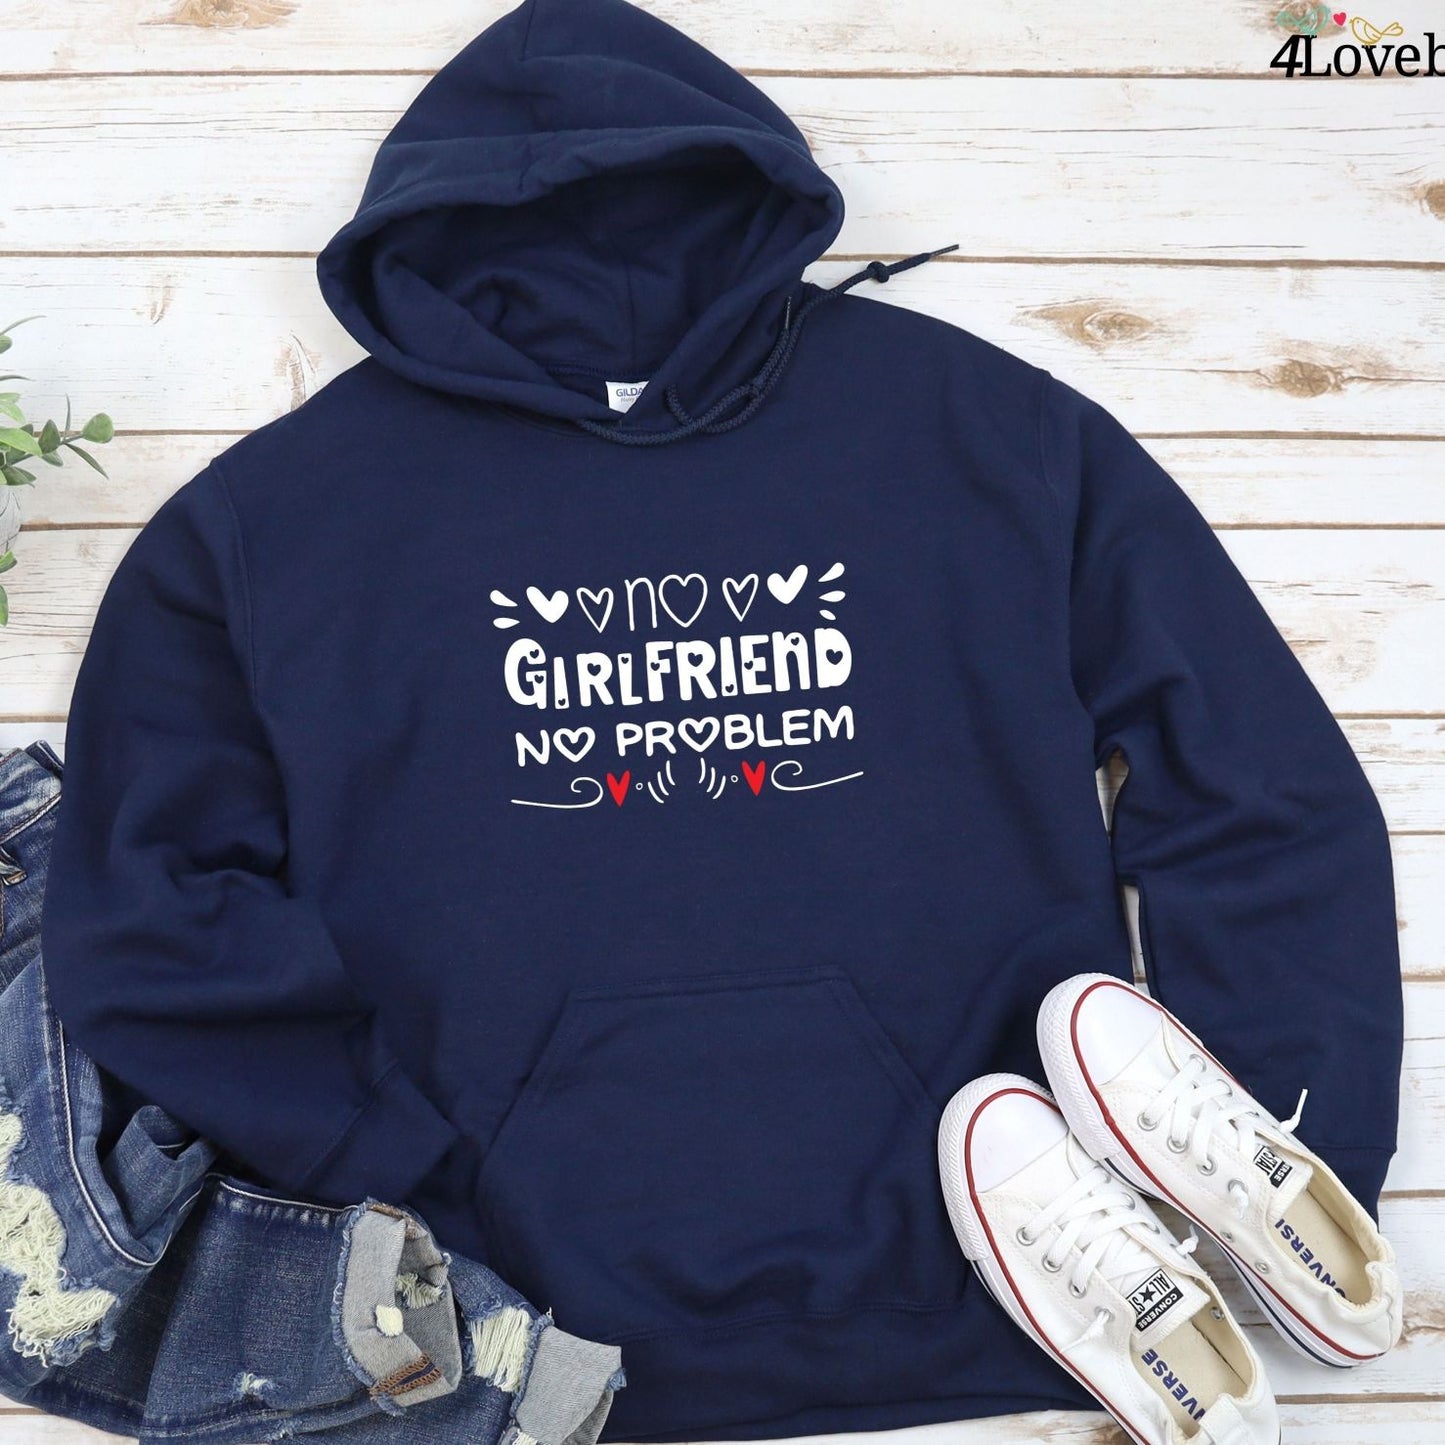 No Boyfriend/Girlfriend, No Problem - Humorous Valentine's Matching Outfits Set